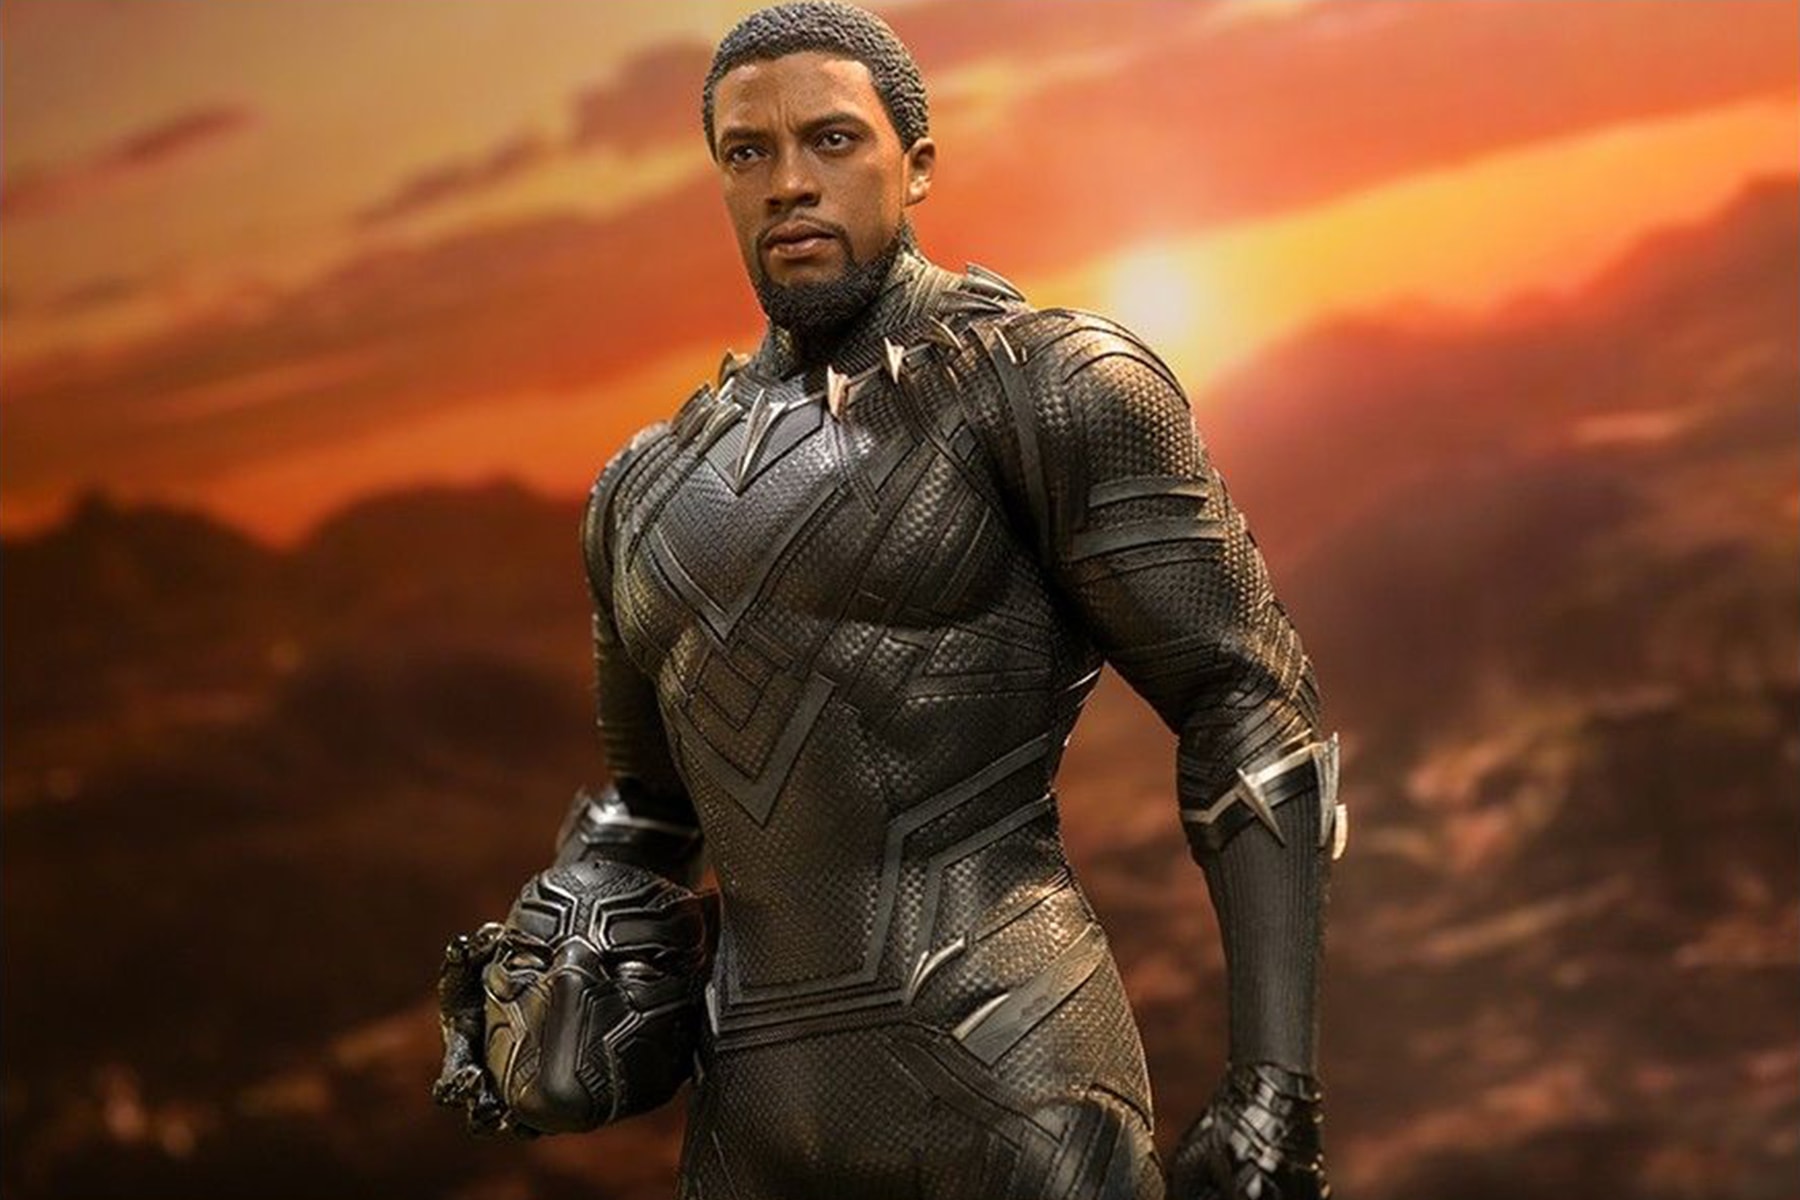 Hot Toys《黑豹 Black Panther》初代戰服版本 1:6 比例雕塑模型正式登場